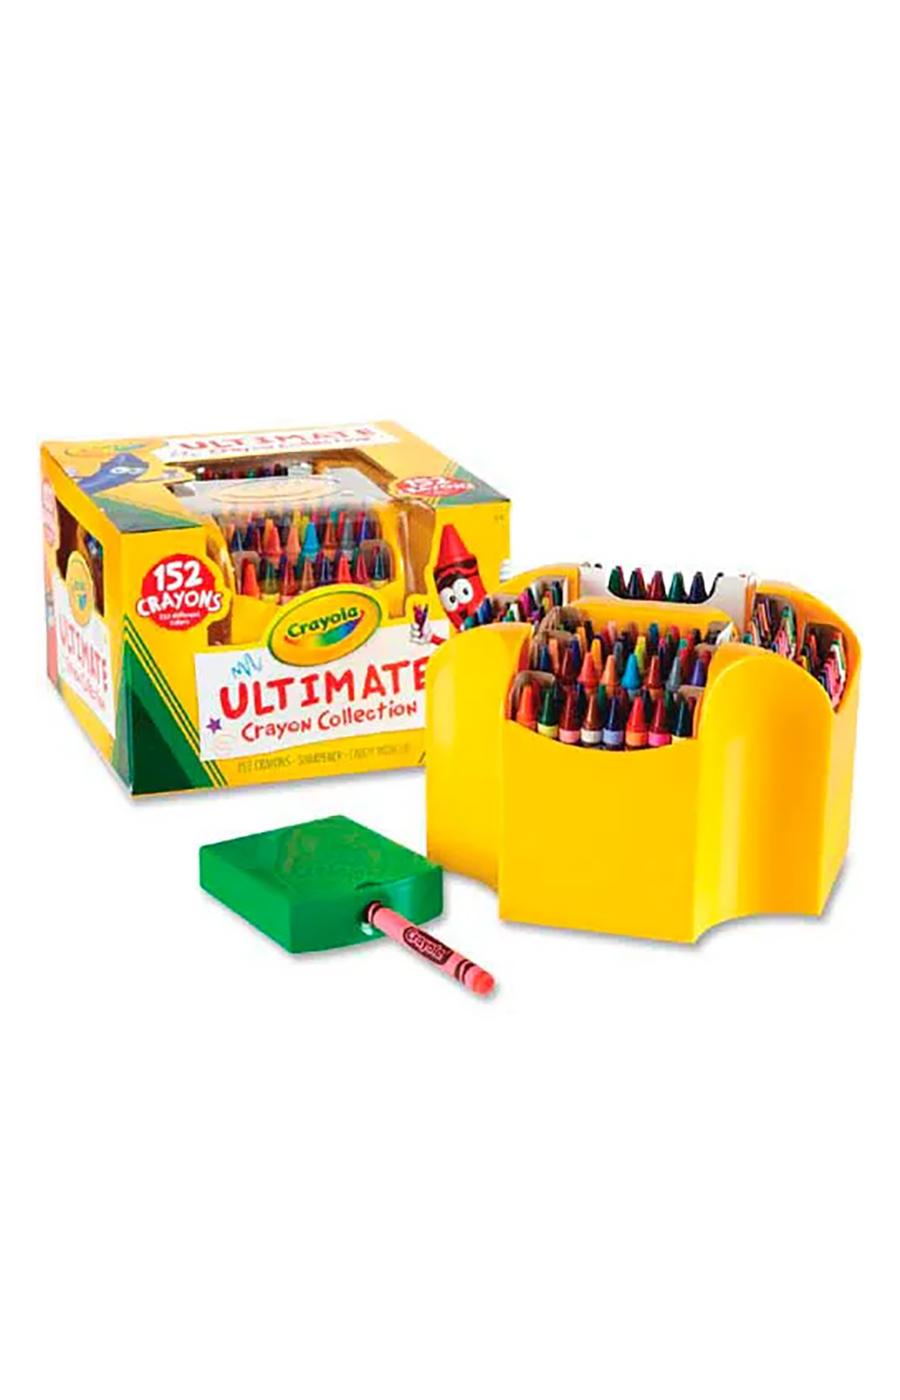 Crayola Ultimate Crayon Collection; image 2 of 2